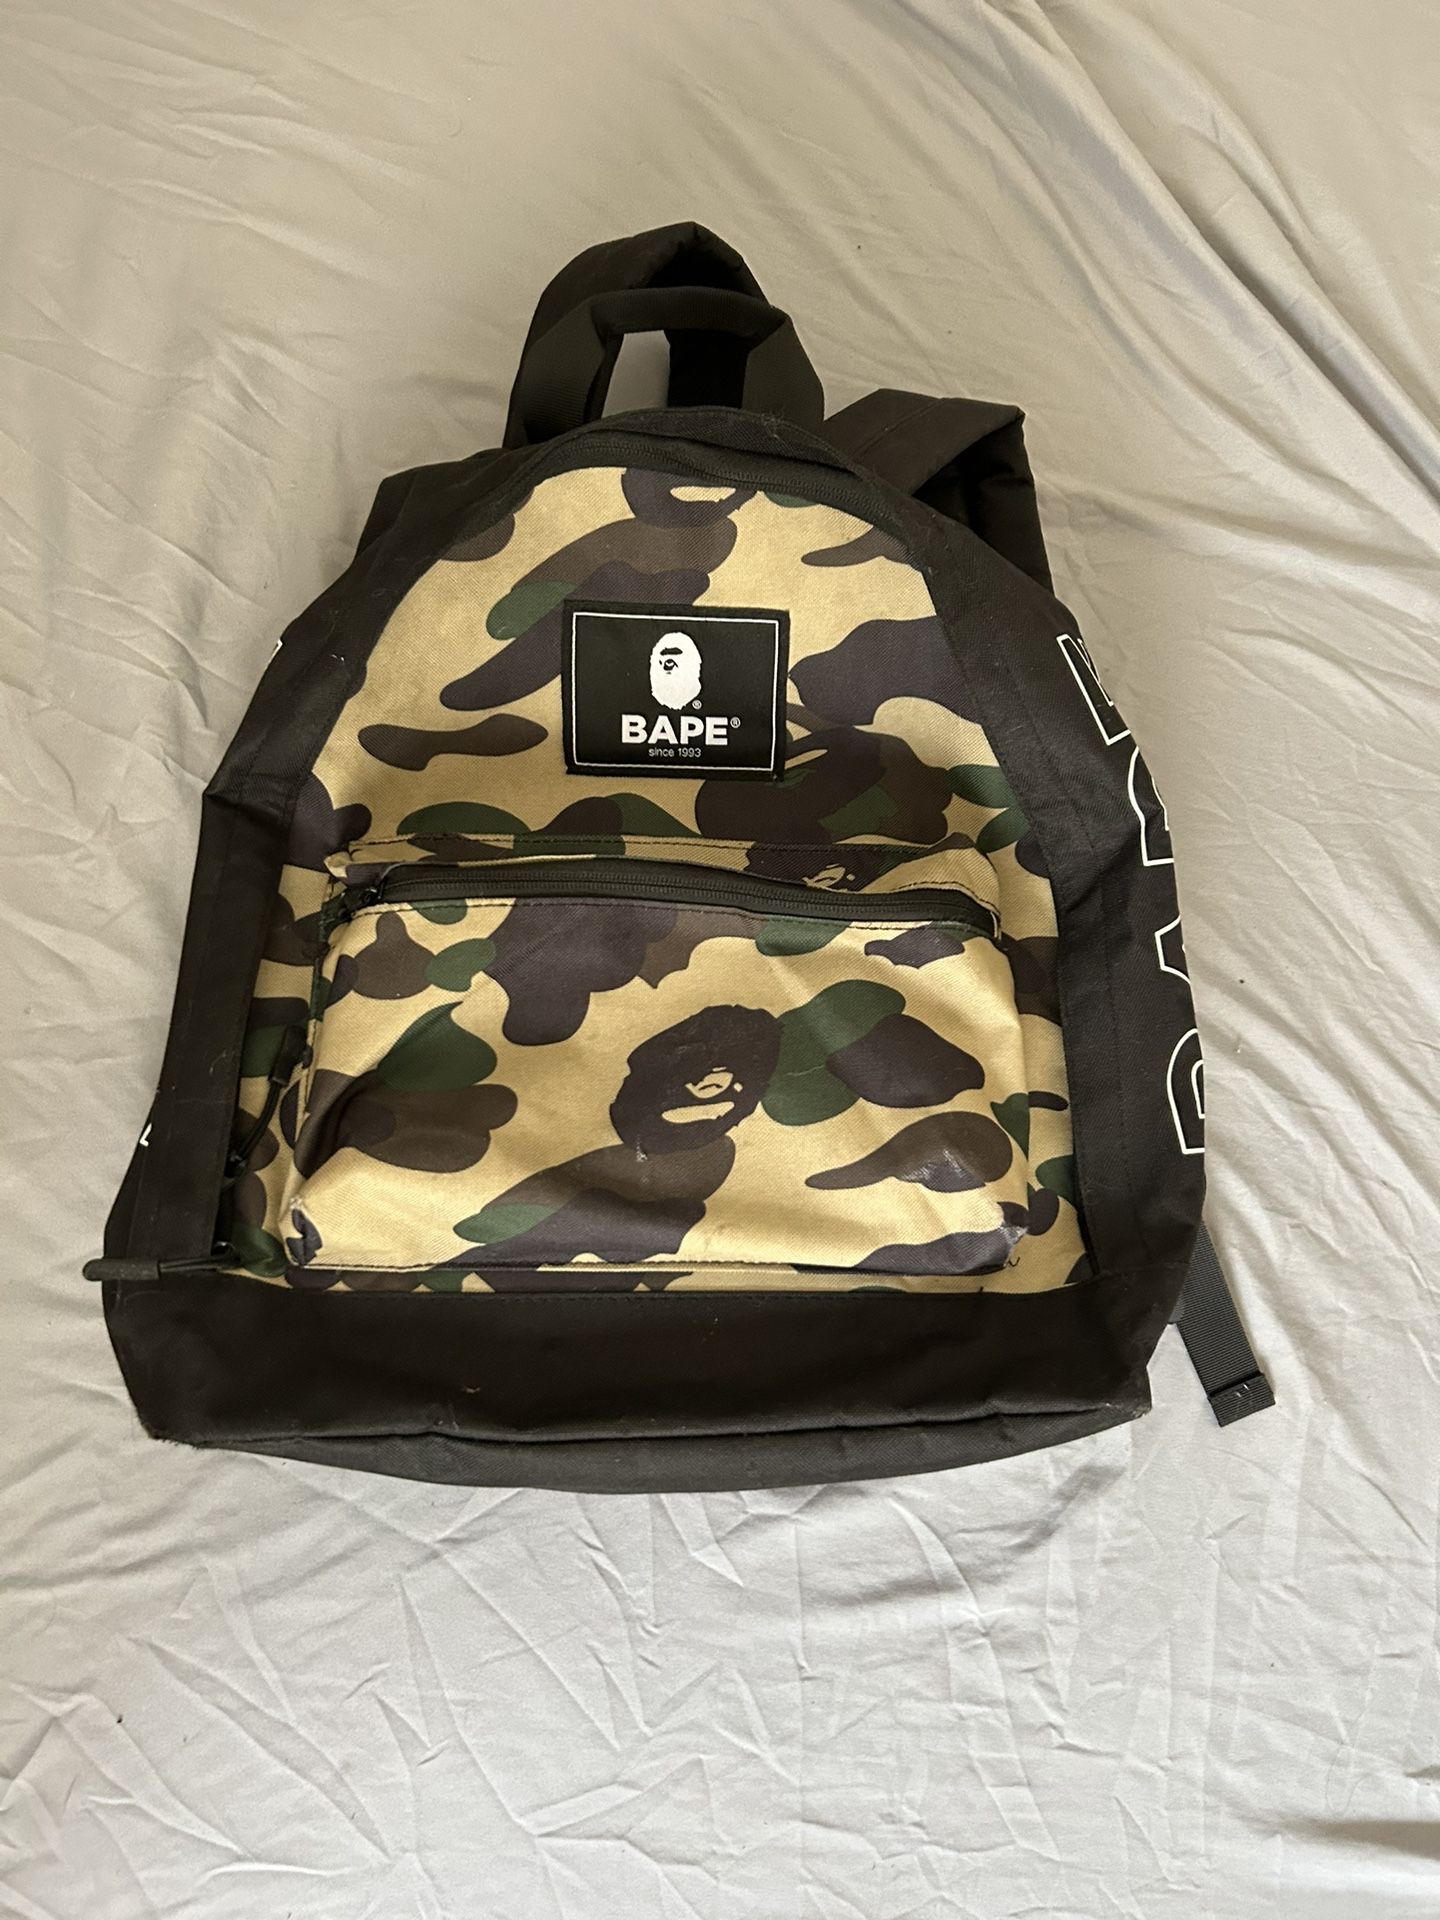 BAPE Summer Pack Backpack Black